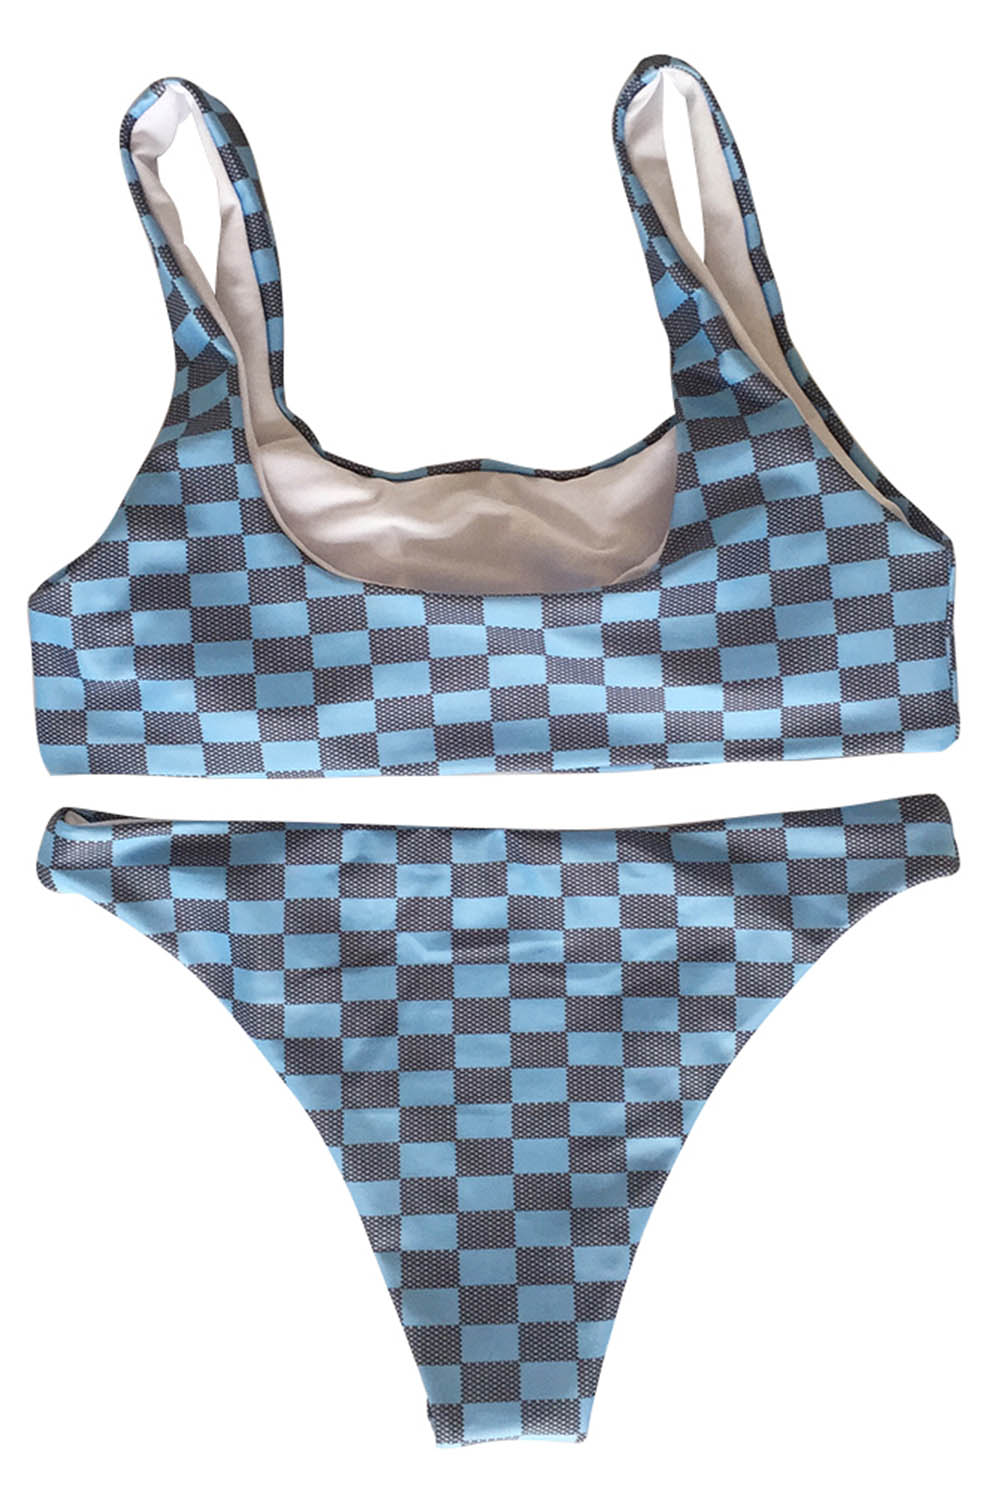 Iyasson Grid Print Tank Top Two-piece Bikini Set